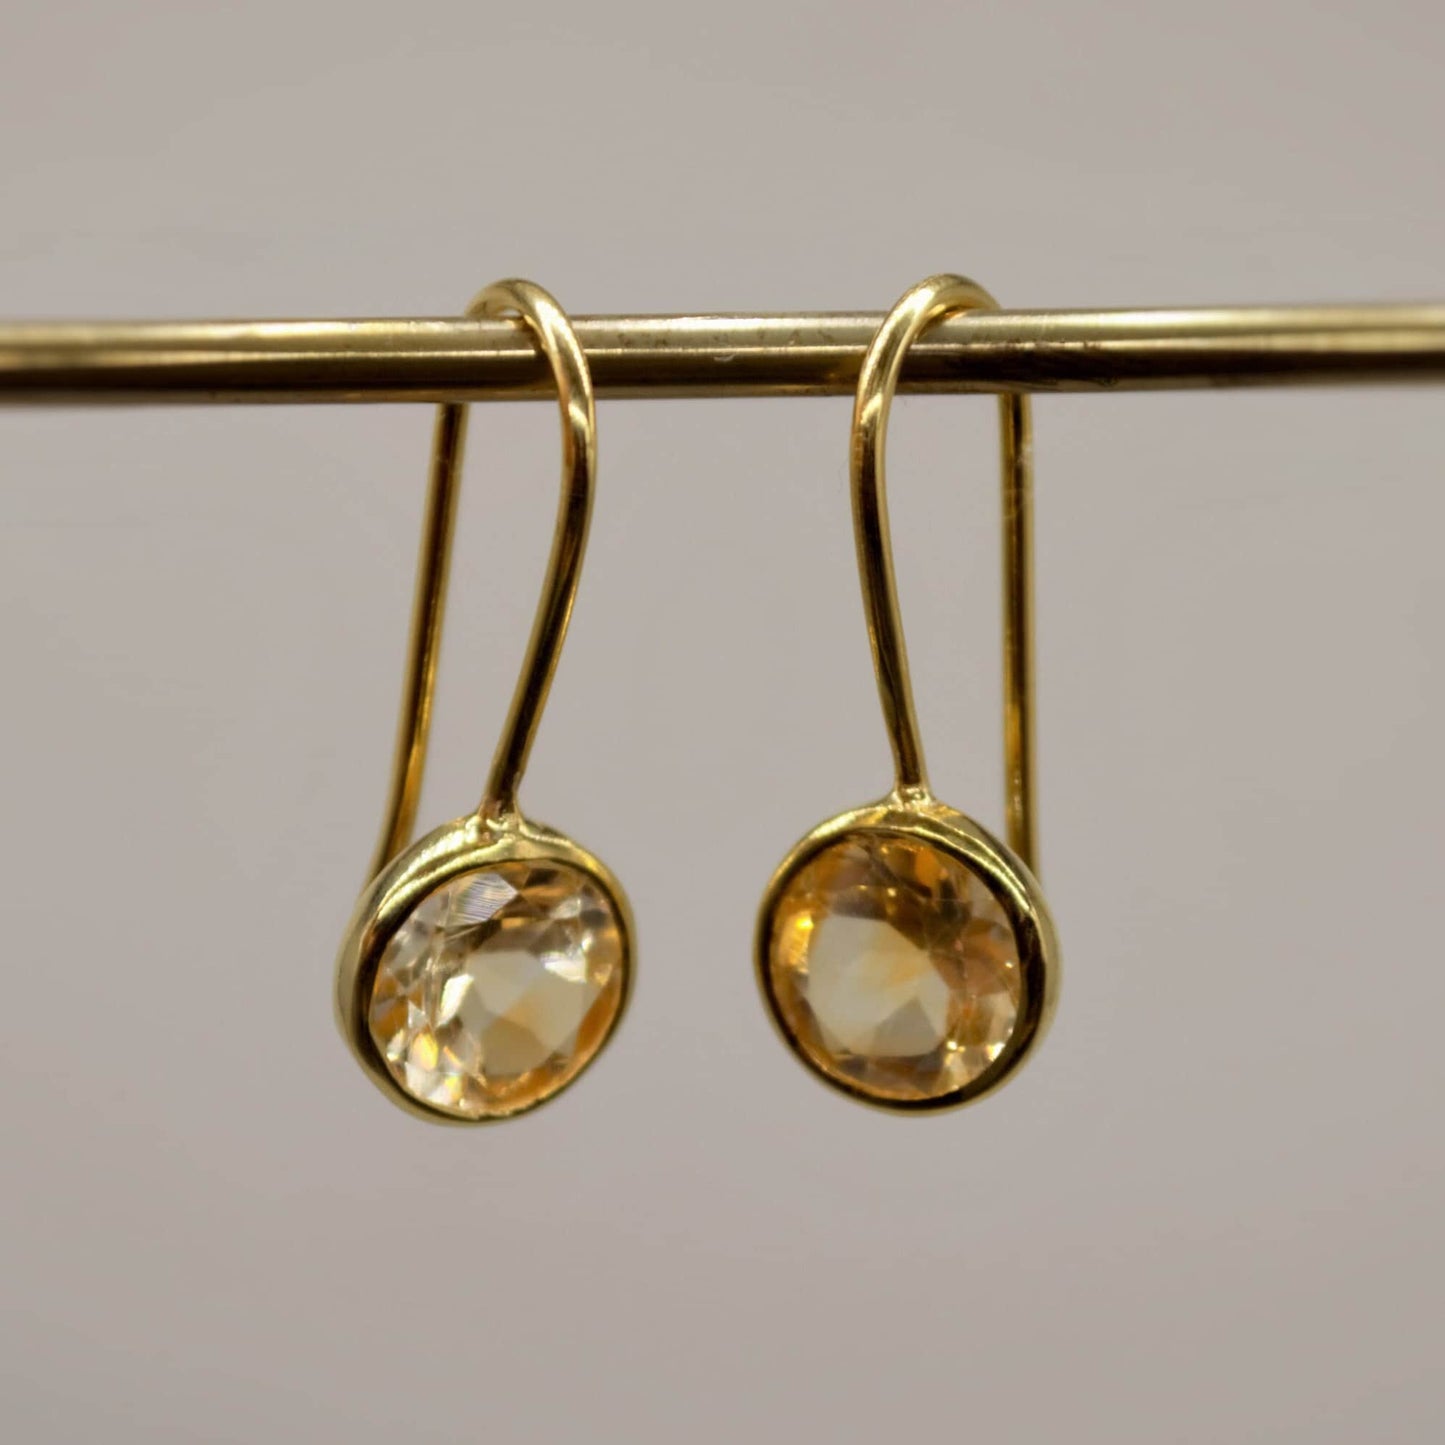 Citrine Earrings, Sterling Silver Gold Earrings, Statement Unique Dangle Drop Earrings, November Birthstone, Gift For Her, Birthday Gift